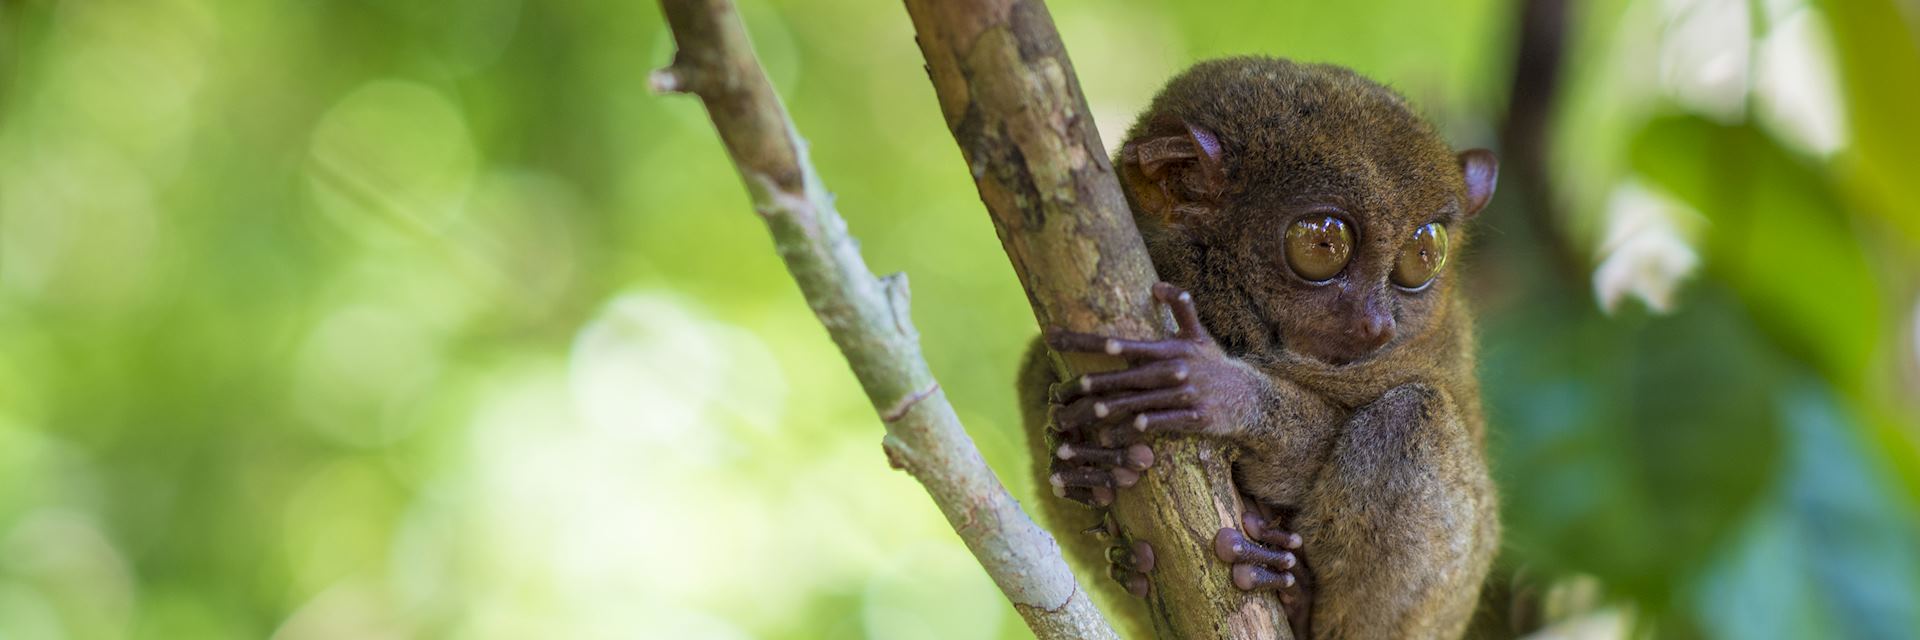 Tarsier monkey, Bohol